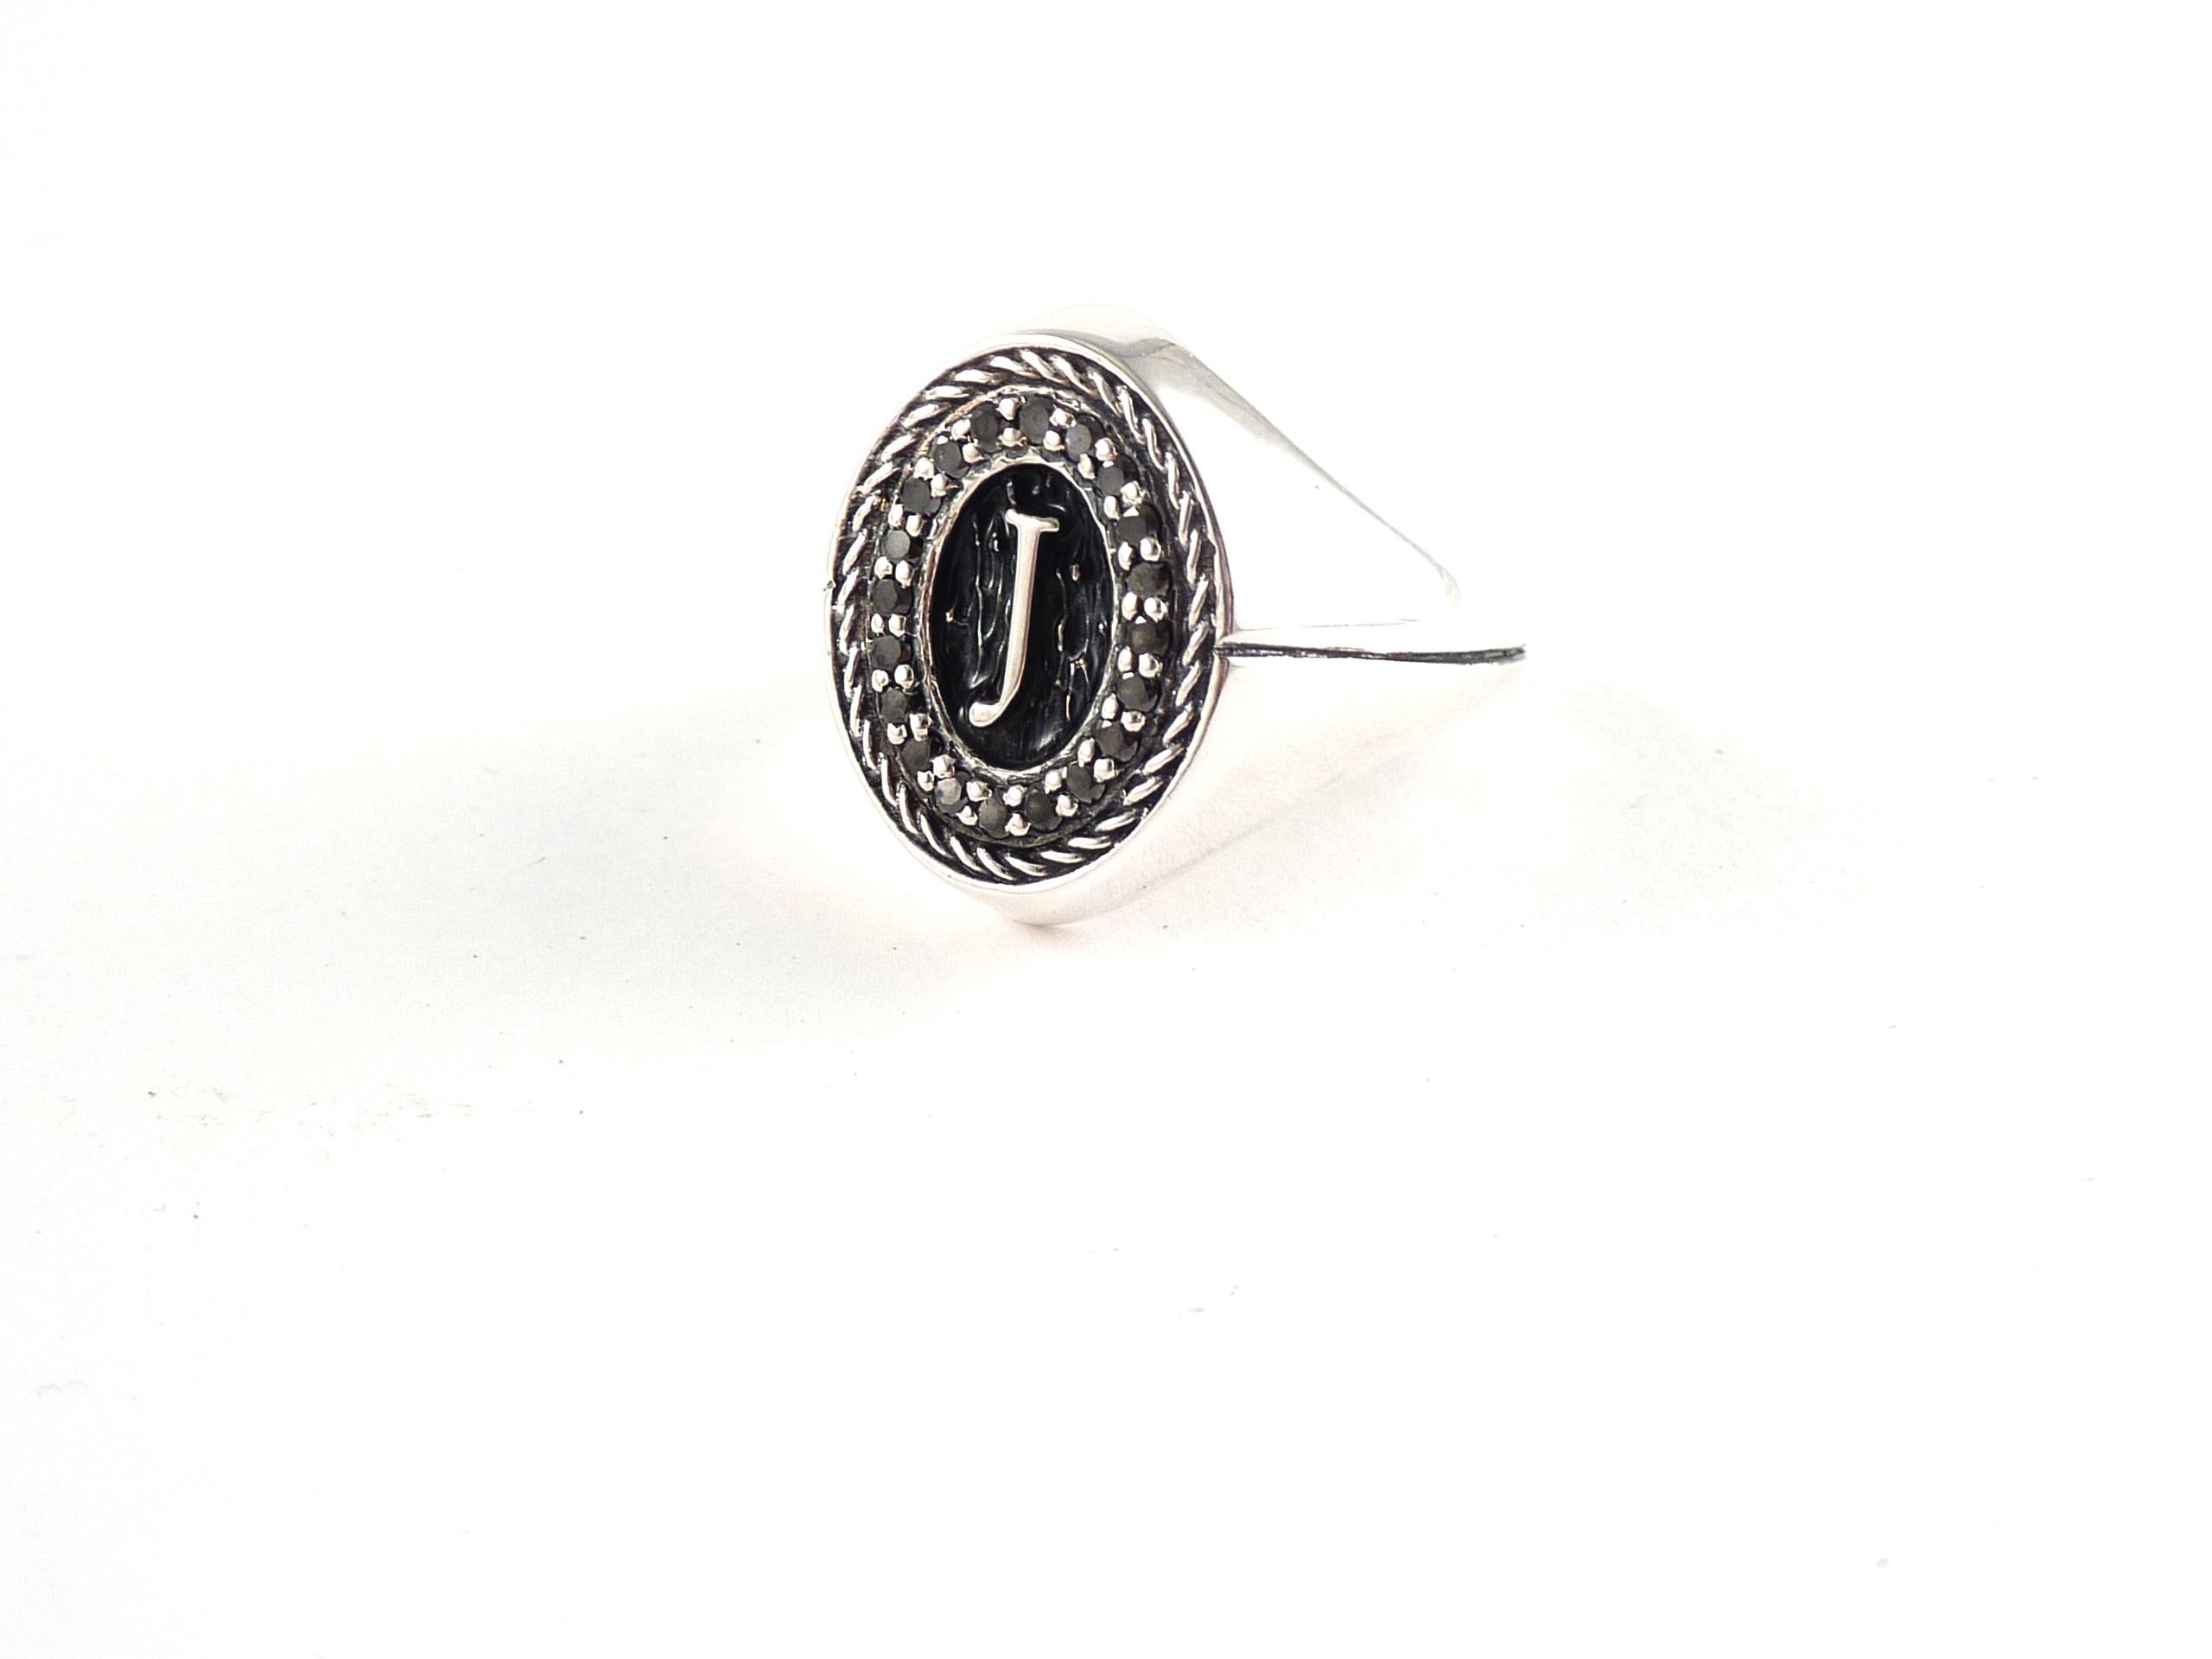 Round Cut Iosselliani Silver and Black Diamond “myfriendsring”Signet Engagement Ring